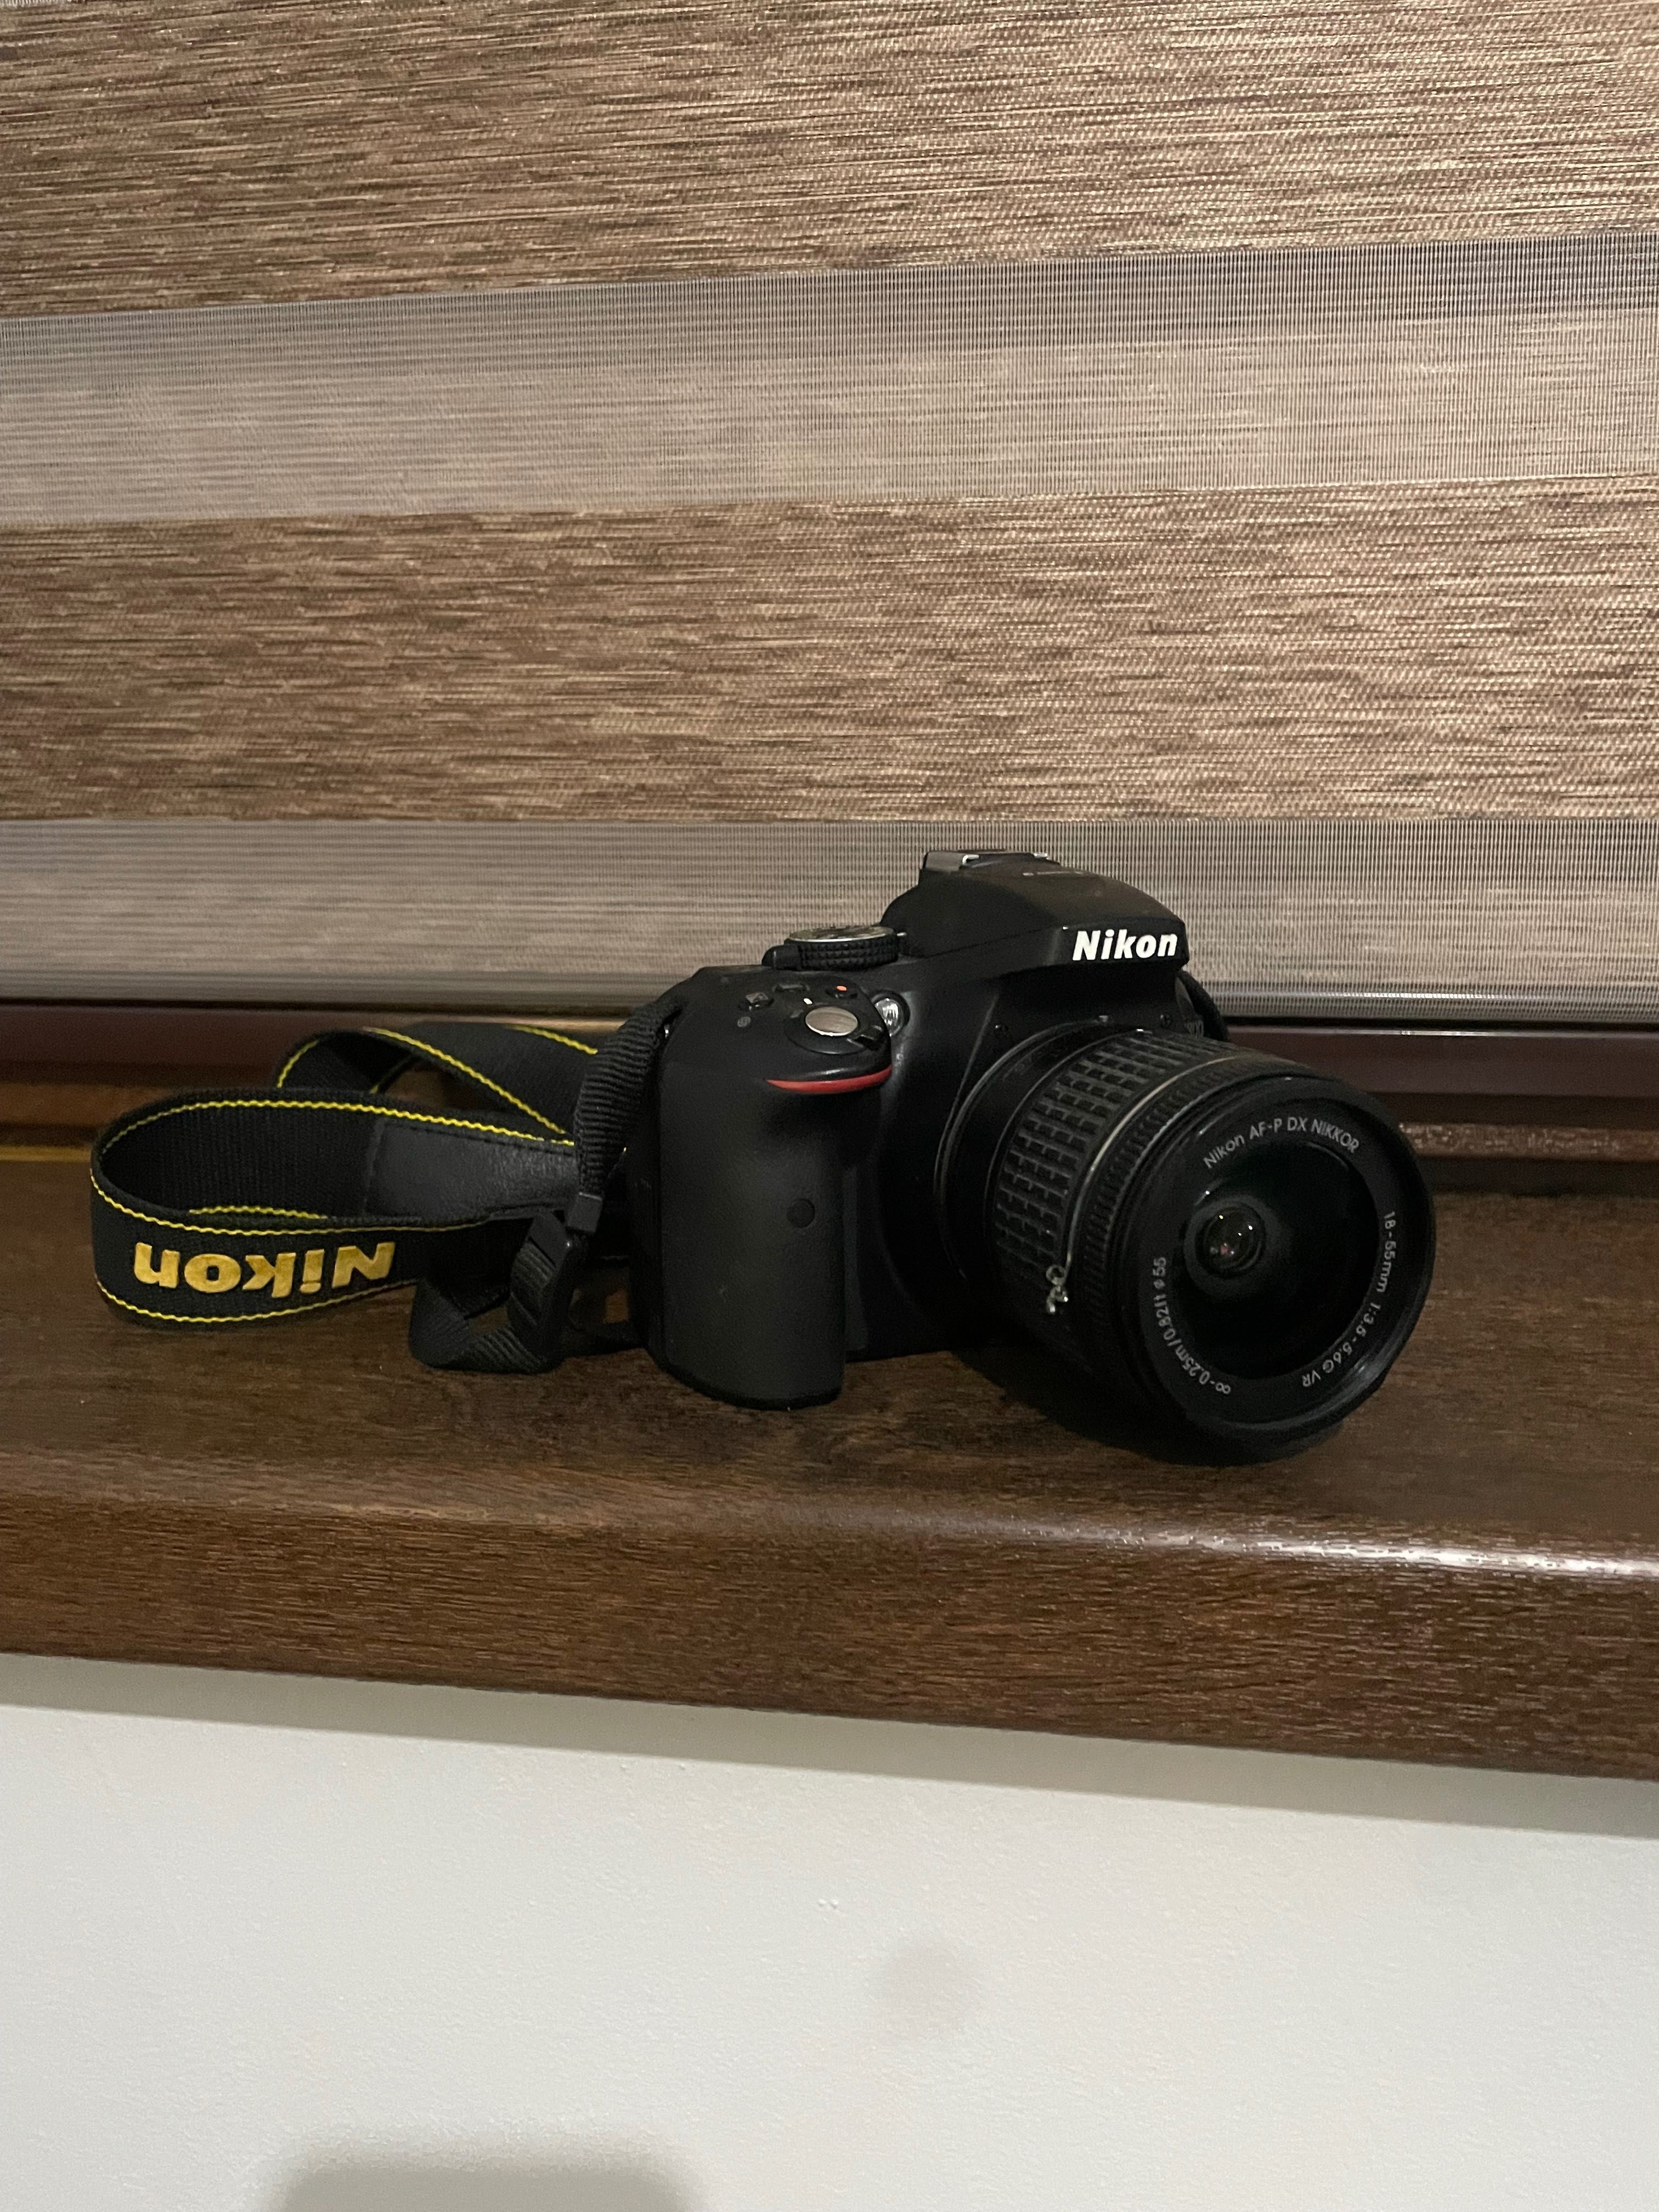 Nikon d5300 DSLR